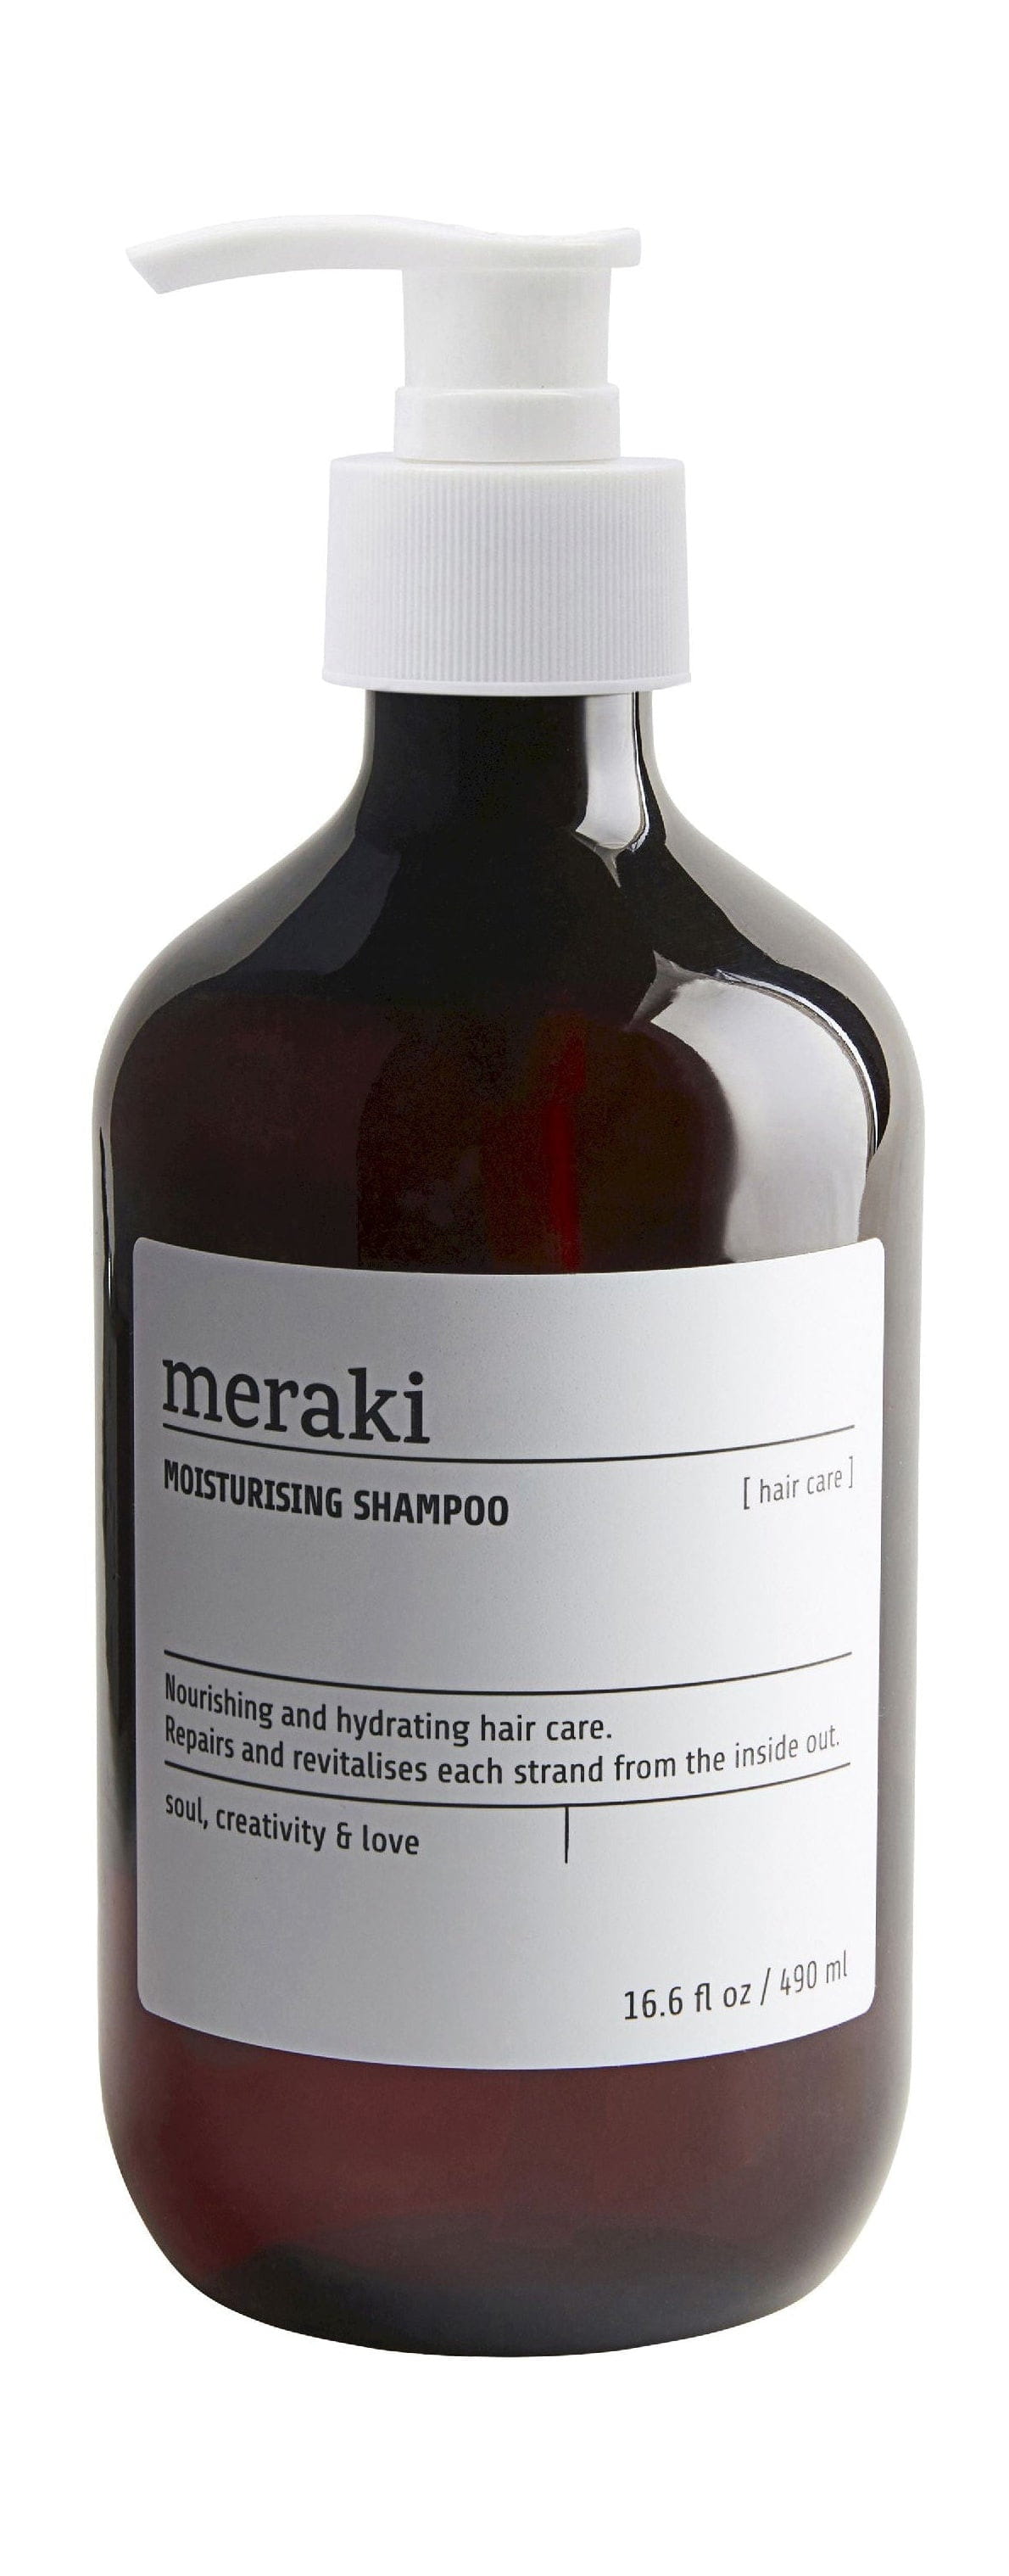 Meraki Feuchthalte-Shampoo 490 ml